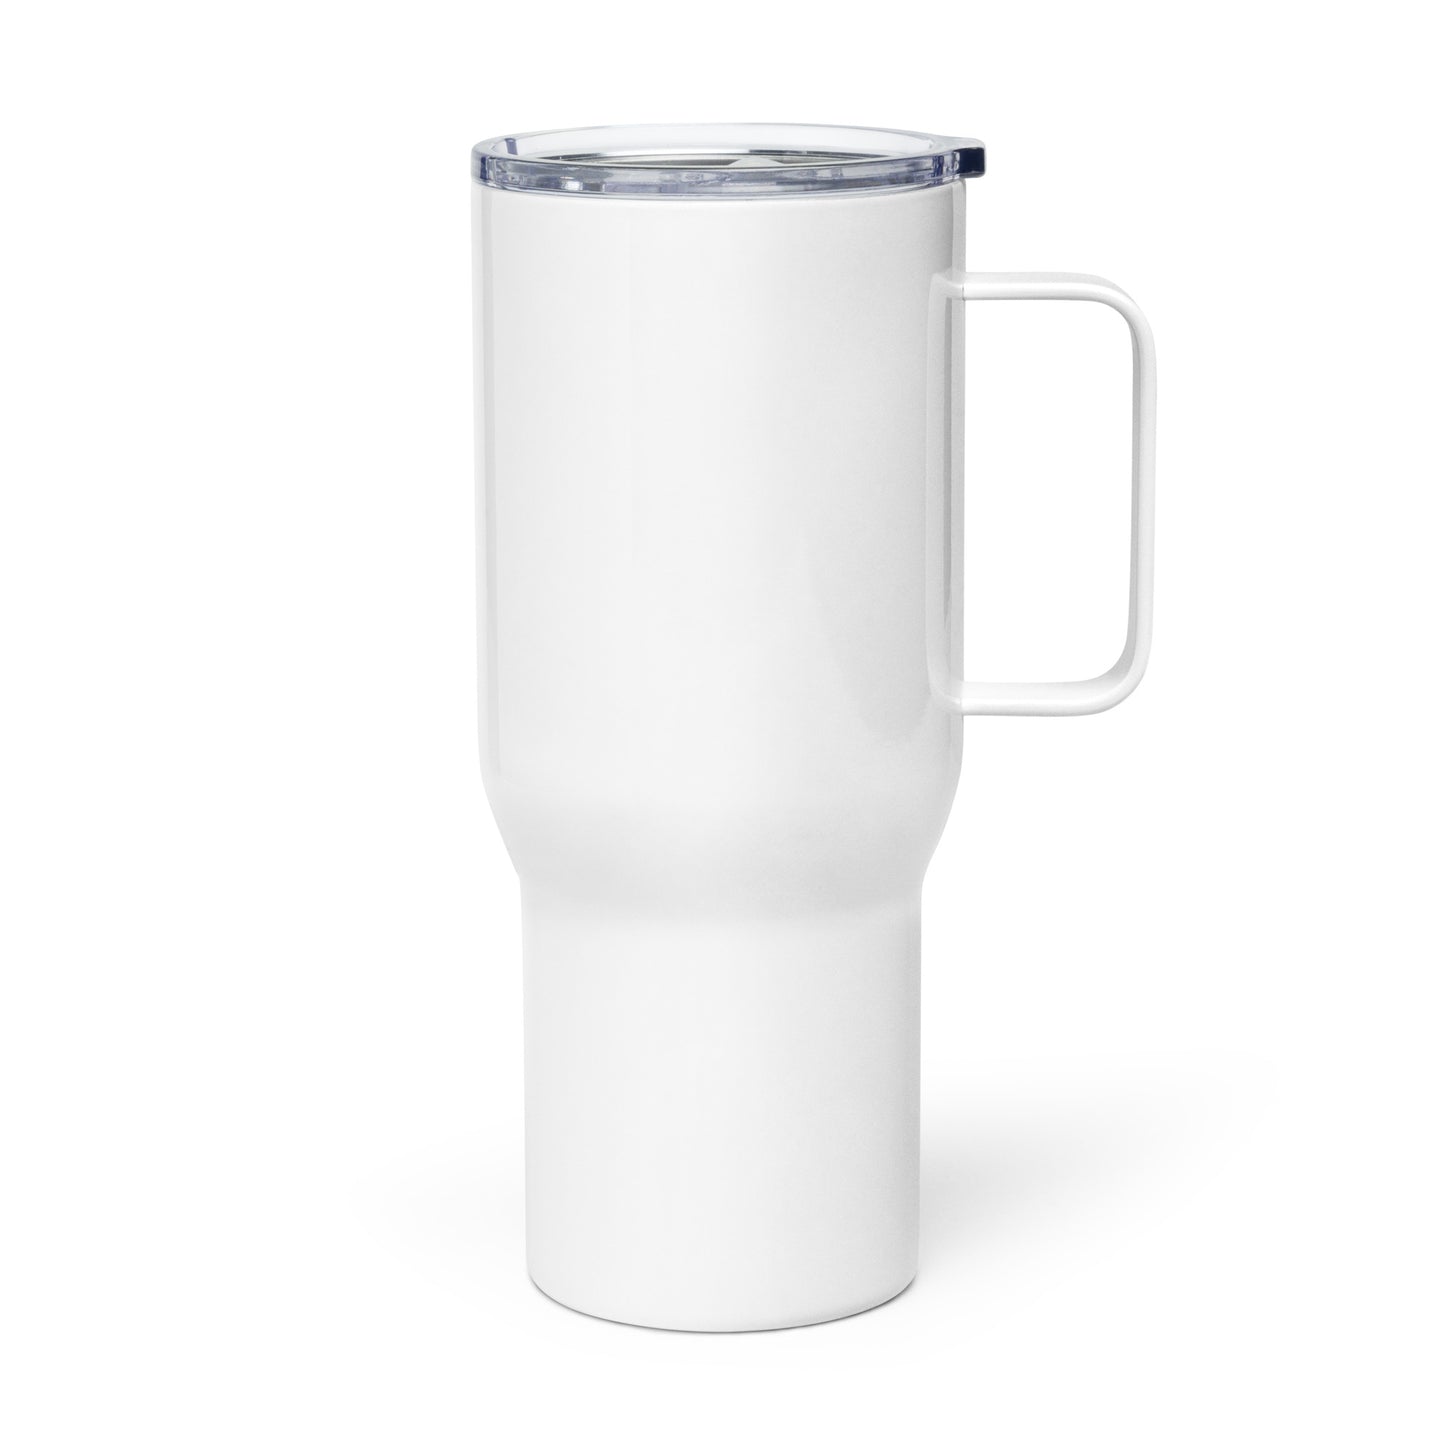 Nichelle Clarke | Travel mug with a handle